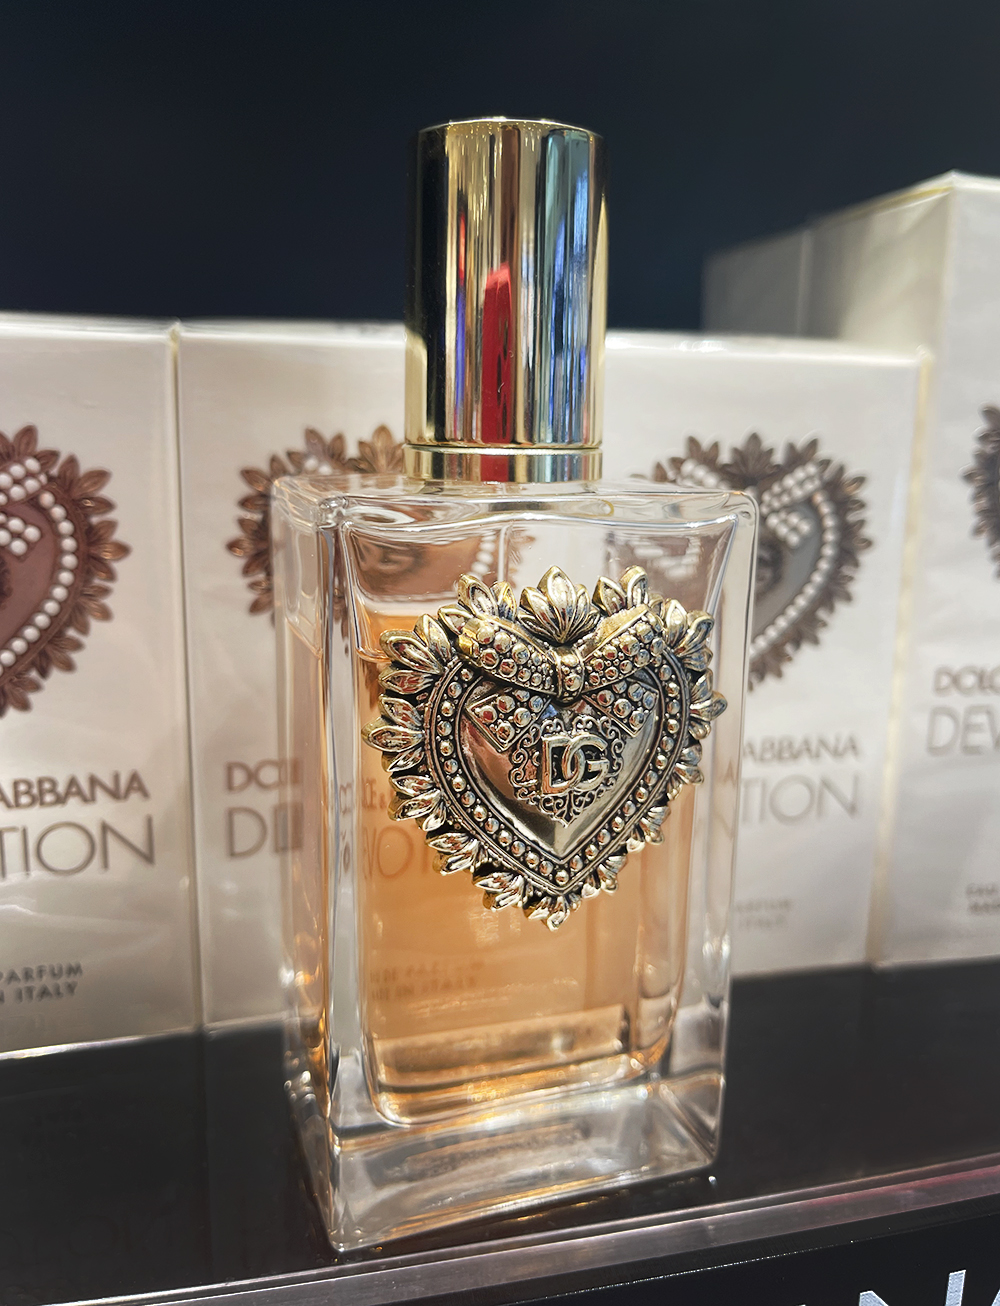 Dolce Gabbana Devotion. Devotion от Dolce&Gabbanа. Devotion от Dolce&Gabbanа 100 мл. Дольче Габбана девотион 10 миллилитров. Devotion dolce gabbana духи